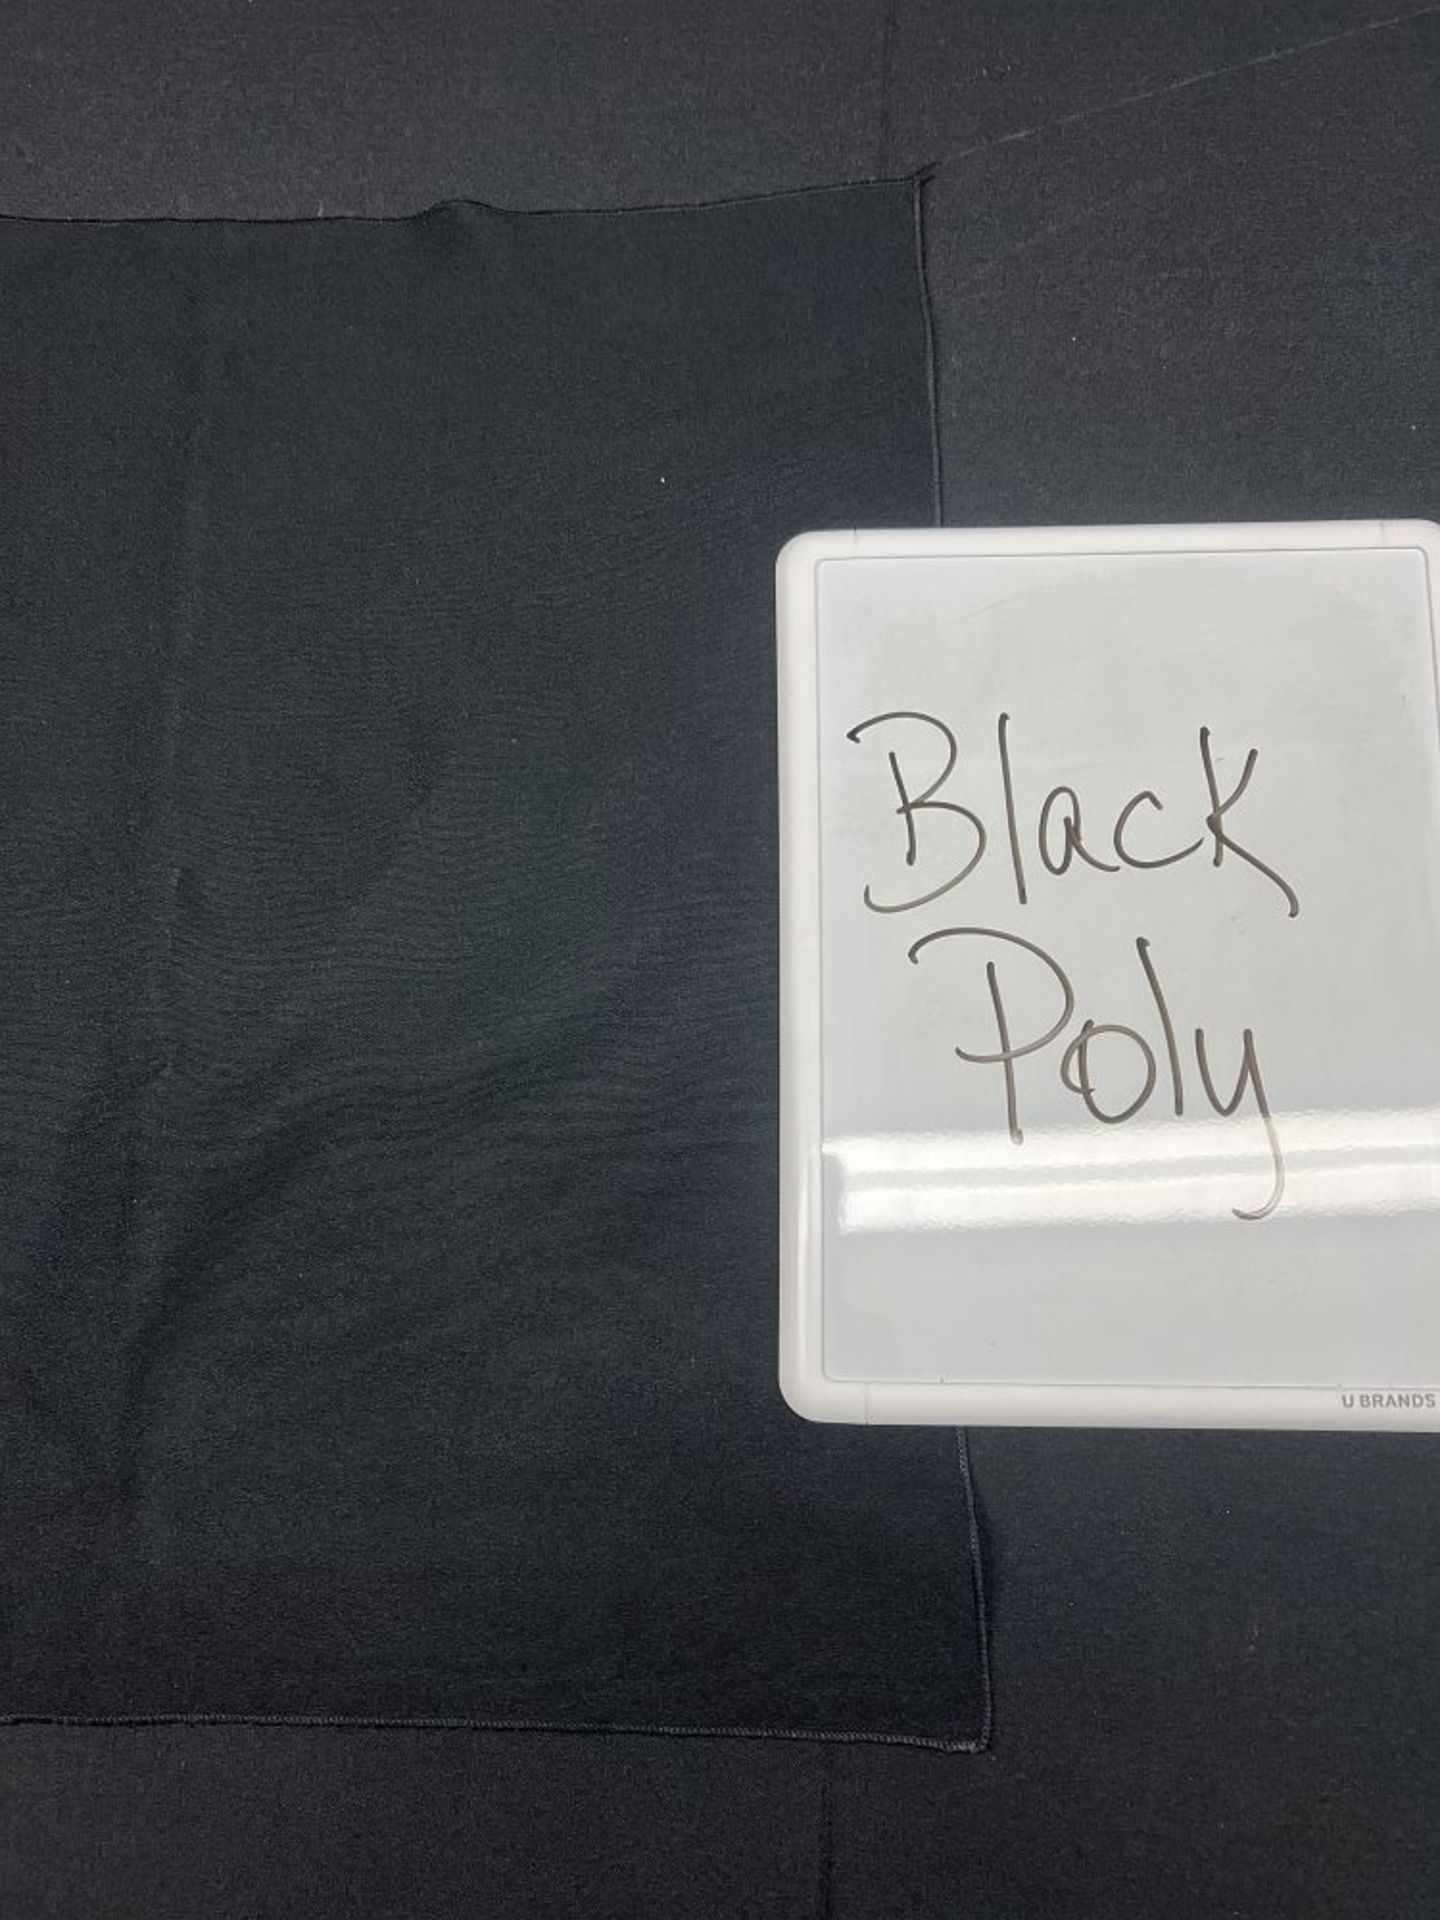 Black 60 x 60 Square Poly Tablecloth